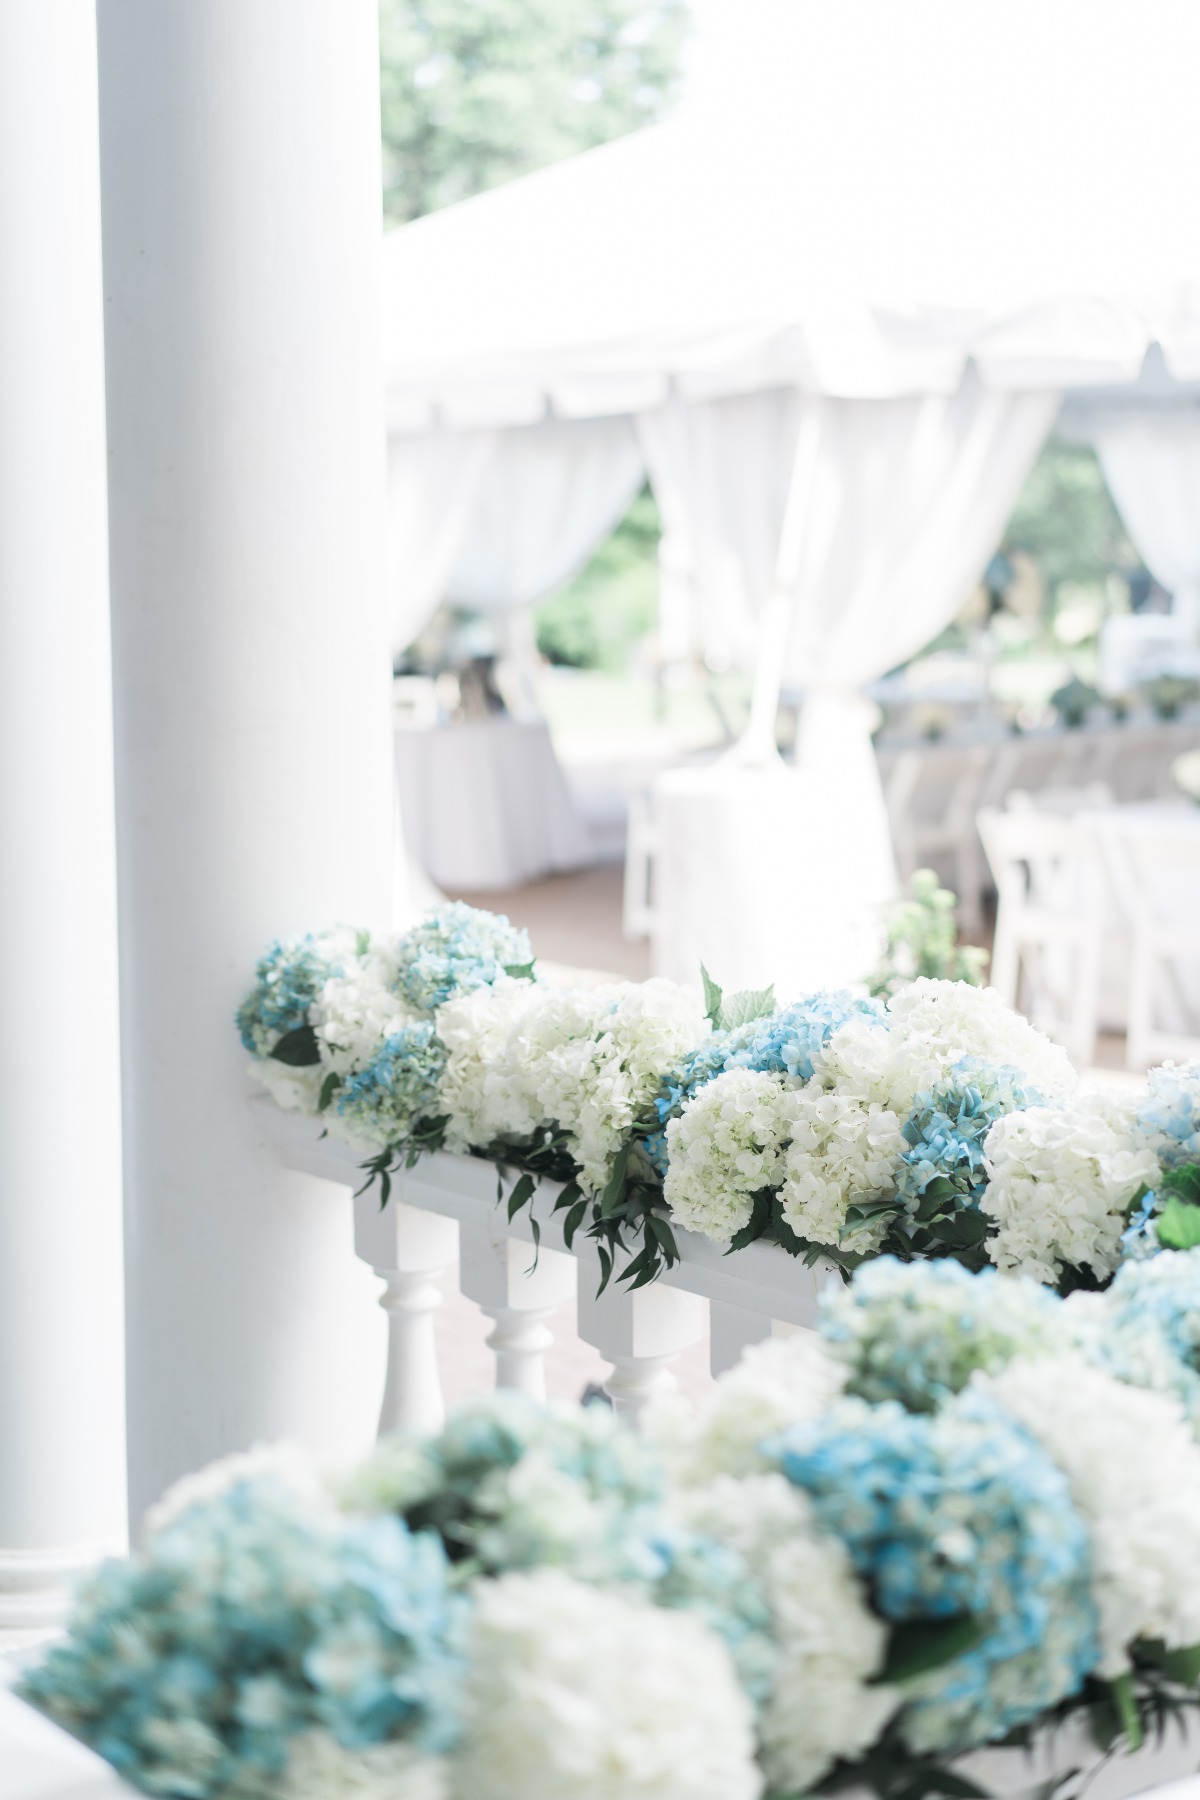 White and blue hydrangea wedding flowers